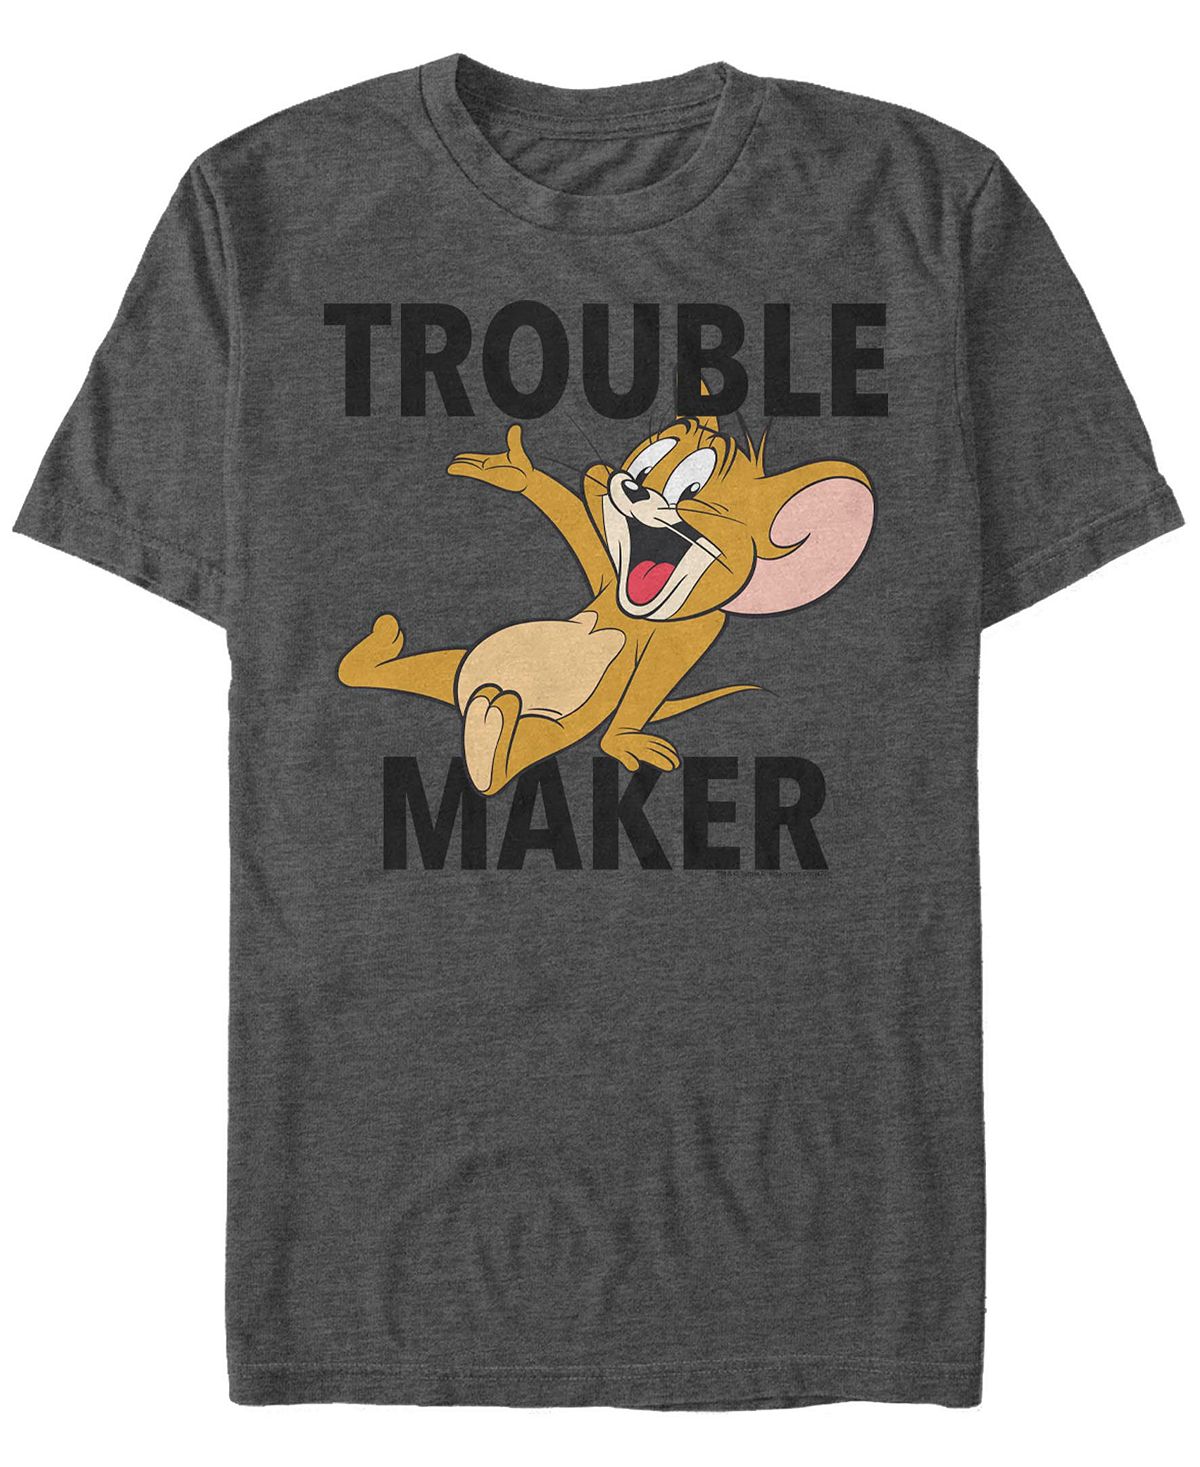 Мужская футболка с коротким рукавом tom jerry trouble maker Fifth Sun, мульти